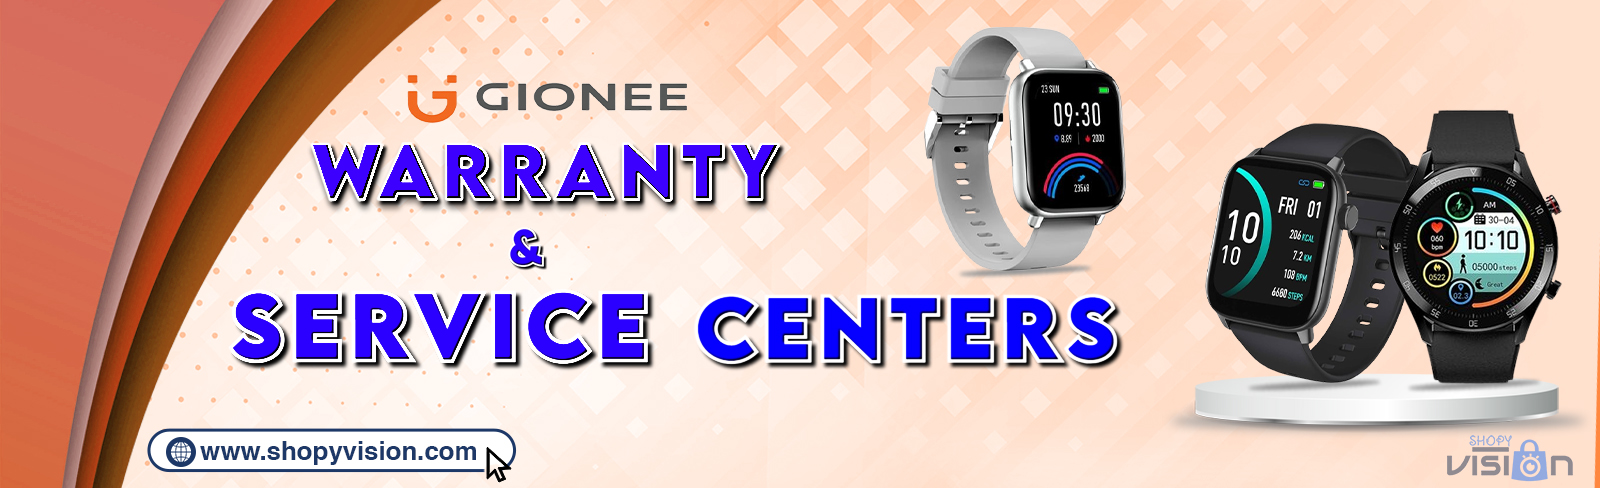 Gionee Warranty & Service center In india Desktop Banner